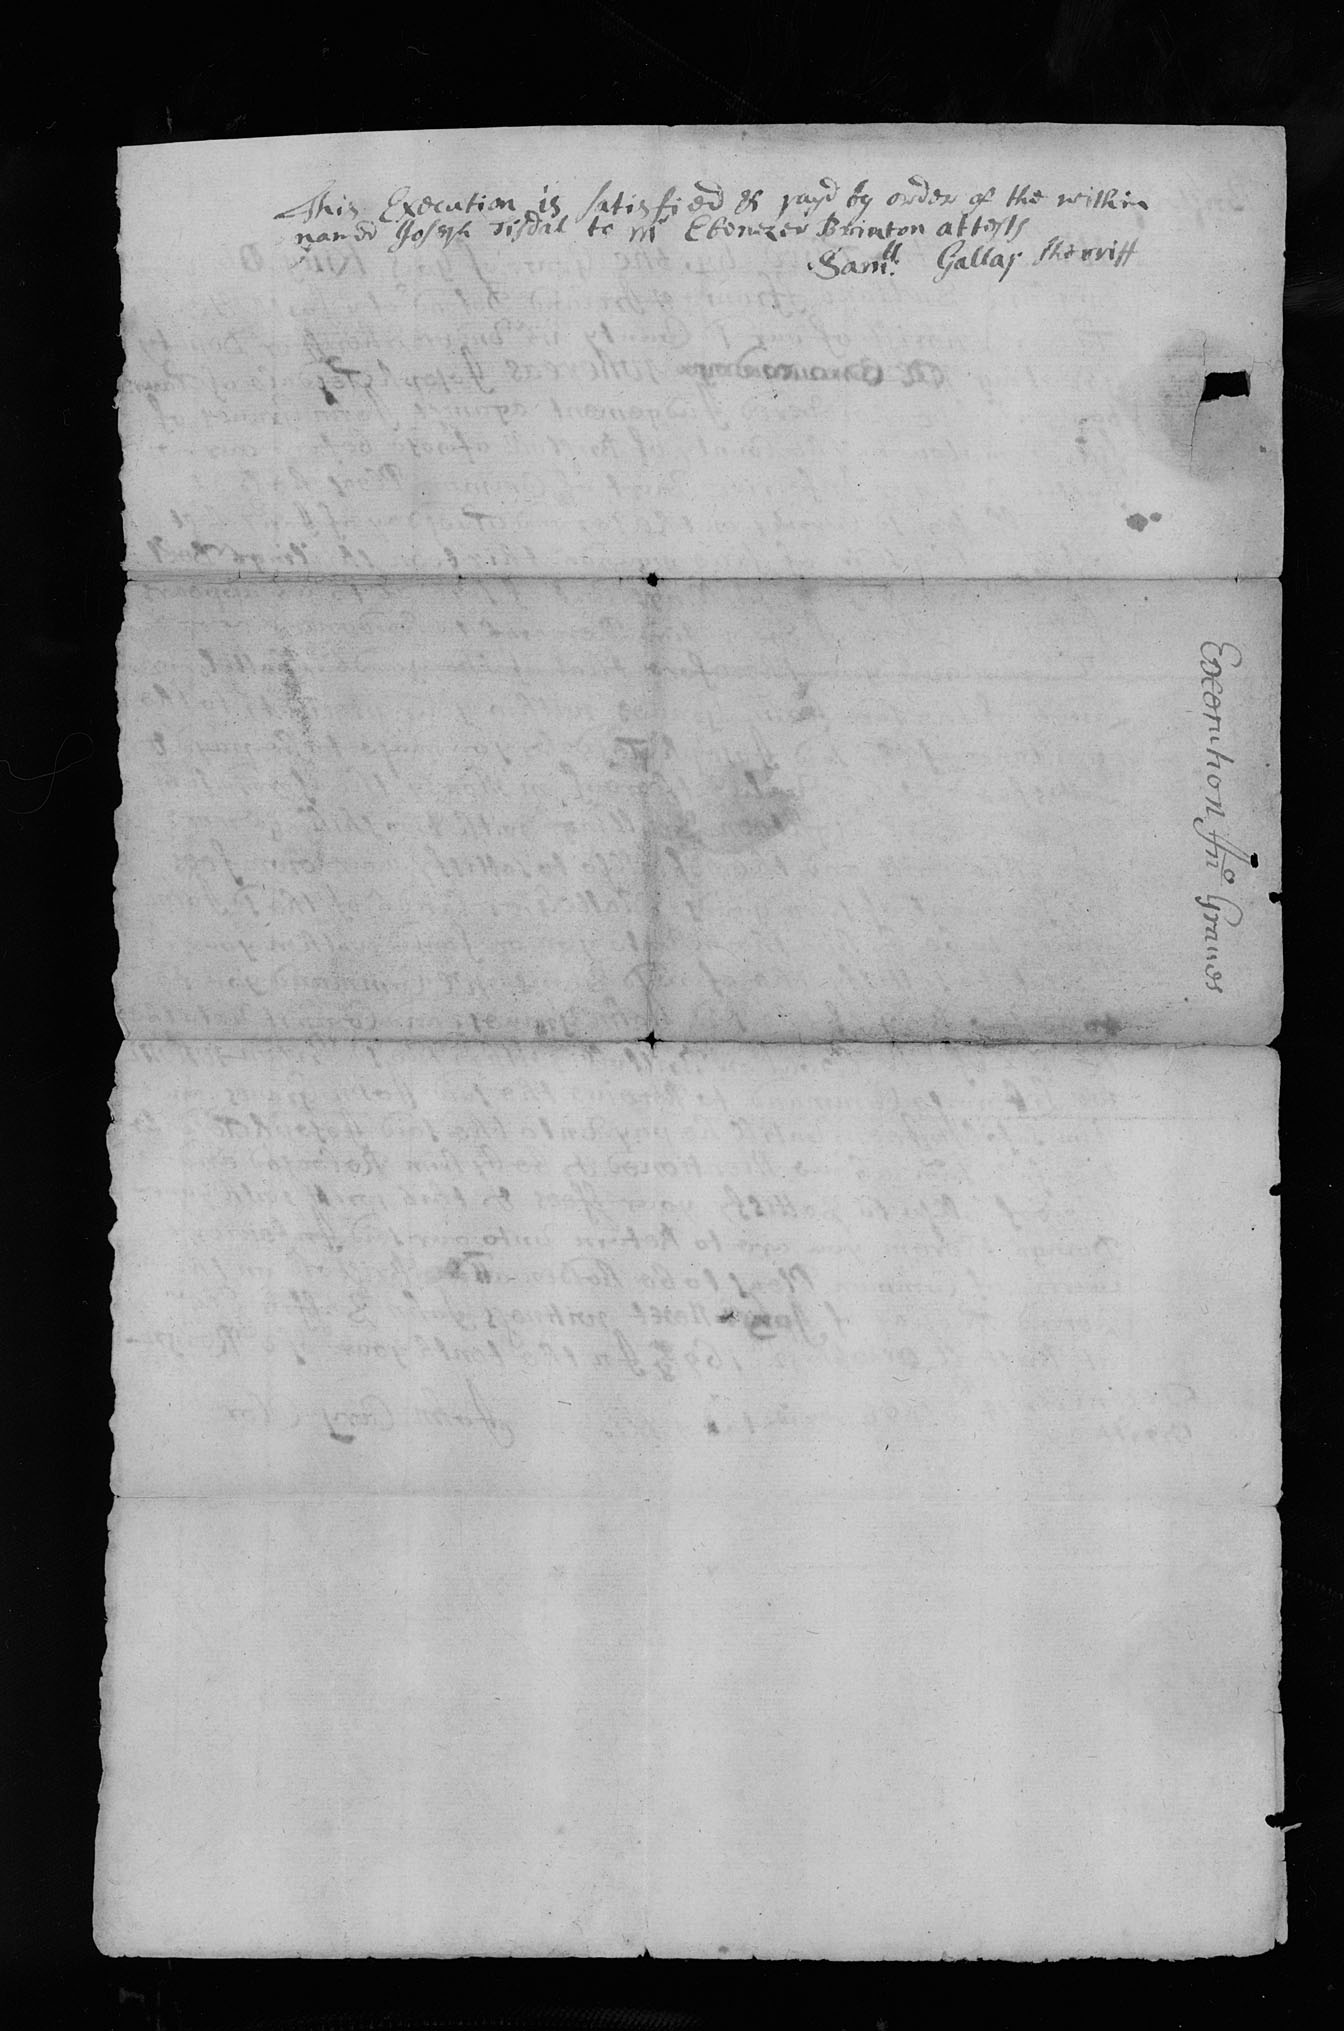 John Cary, "Writ of execution against John Graves," Verso